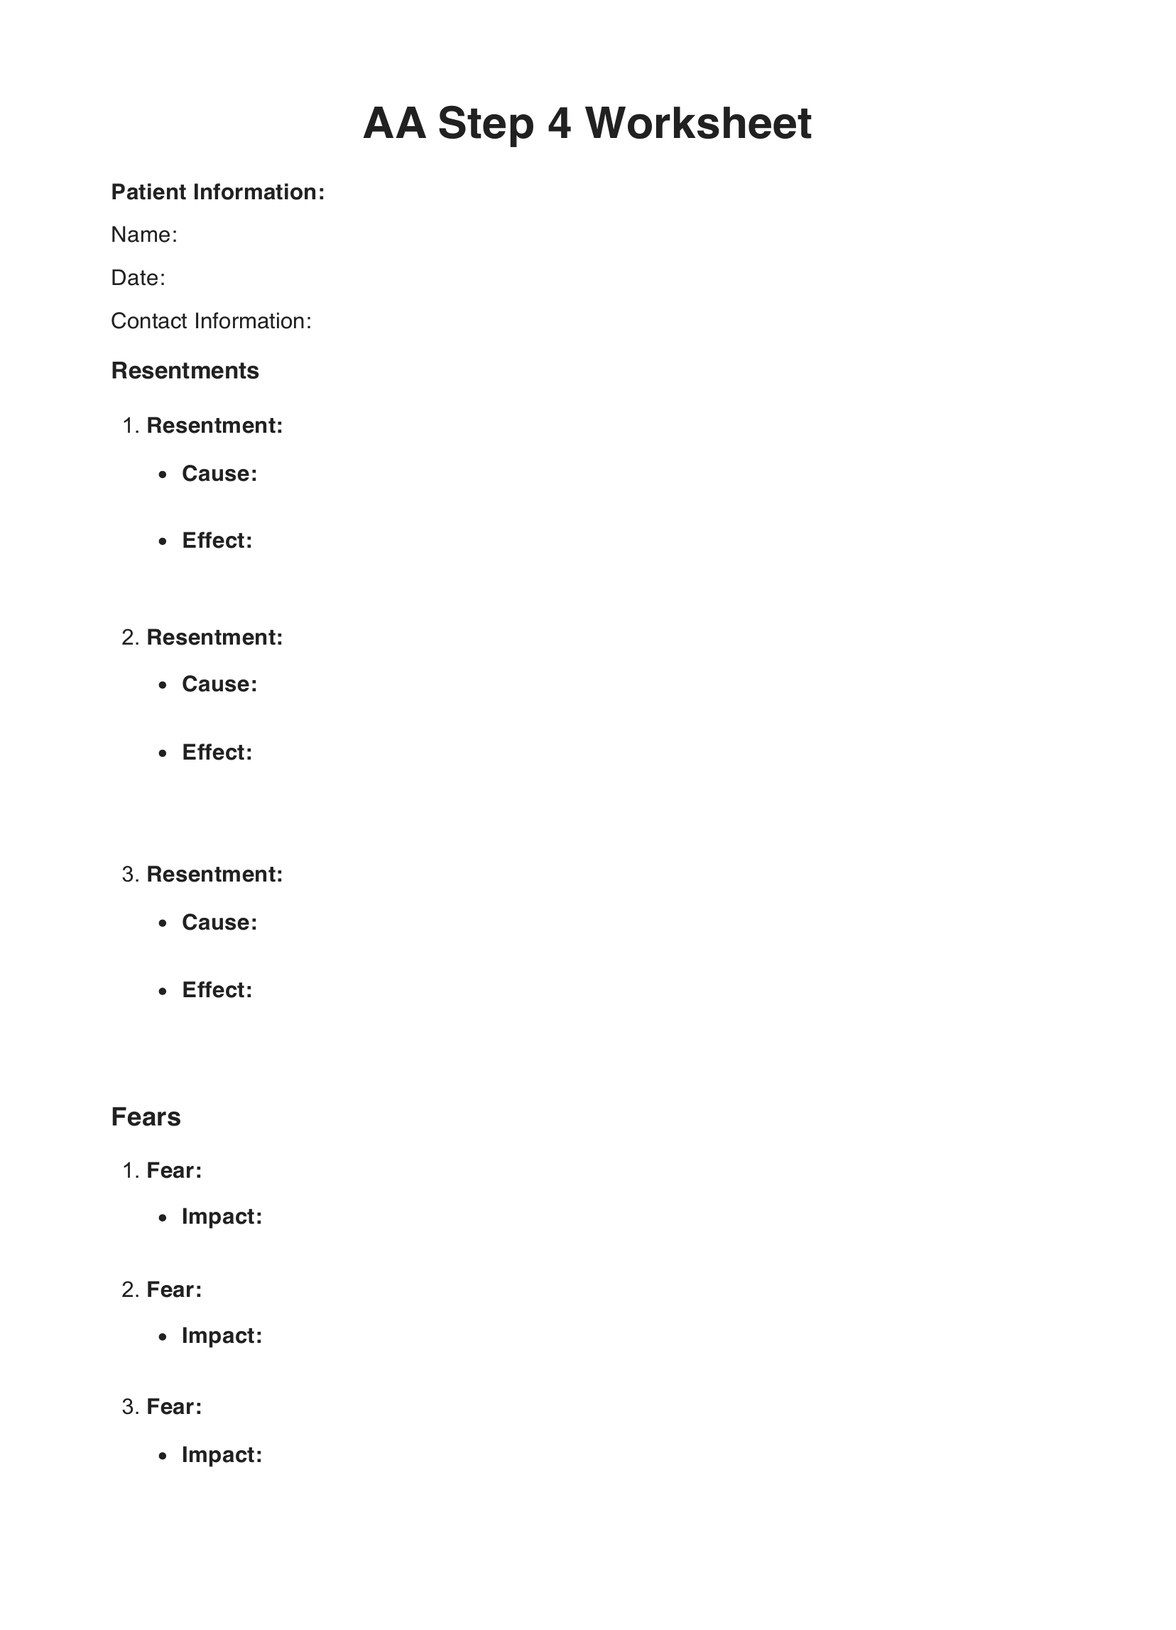 AA Step 4 Worksheets PDF Example